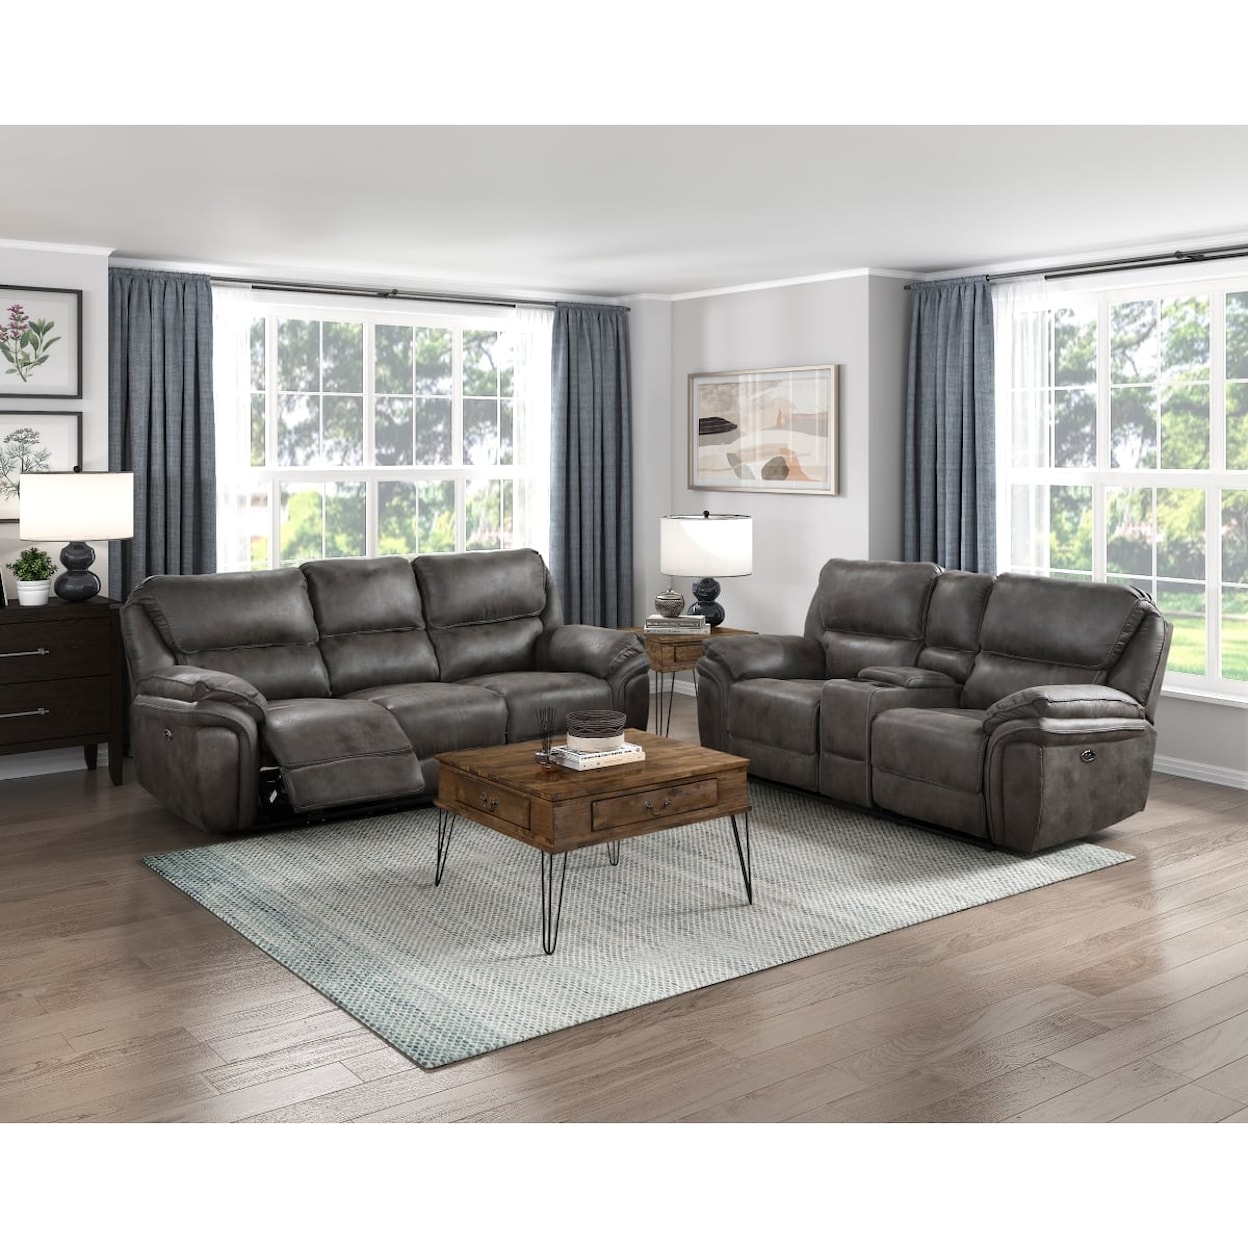 Homelegance Furniture Proctor Power Dual Reclining Loveseat